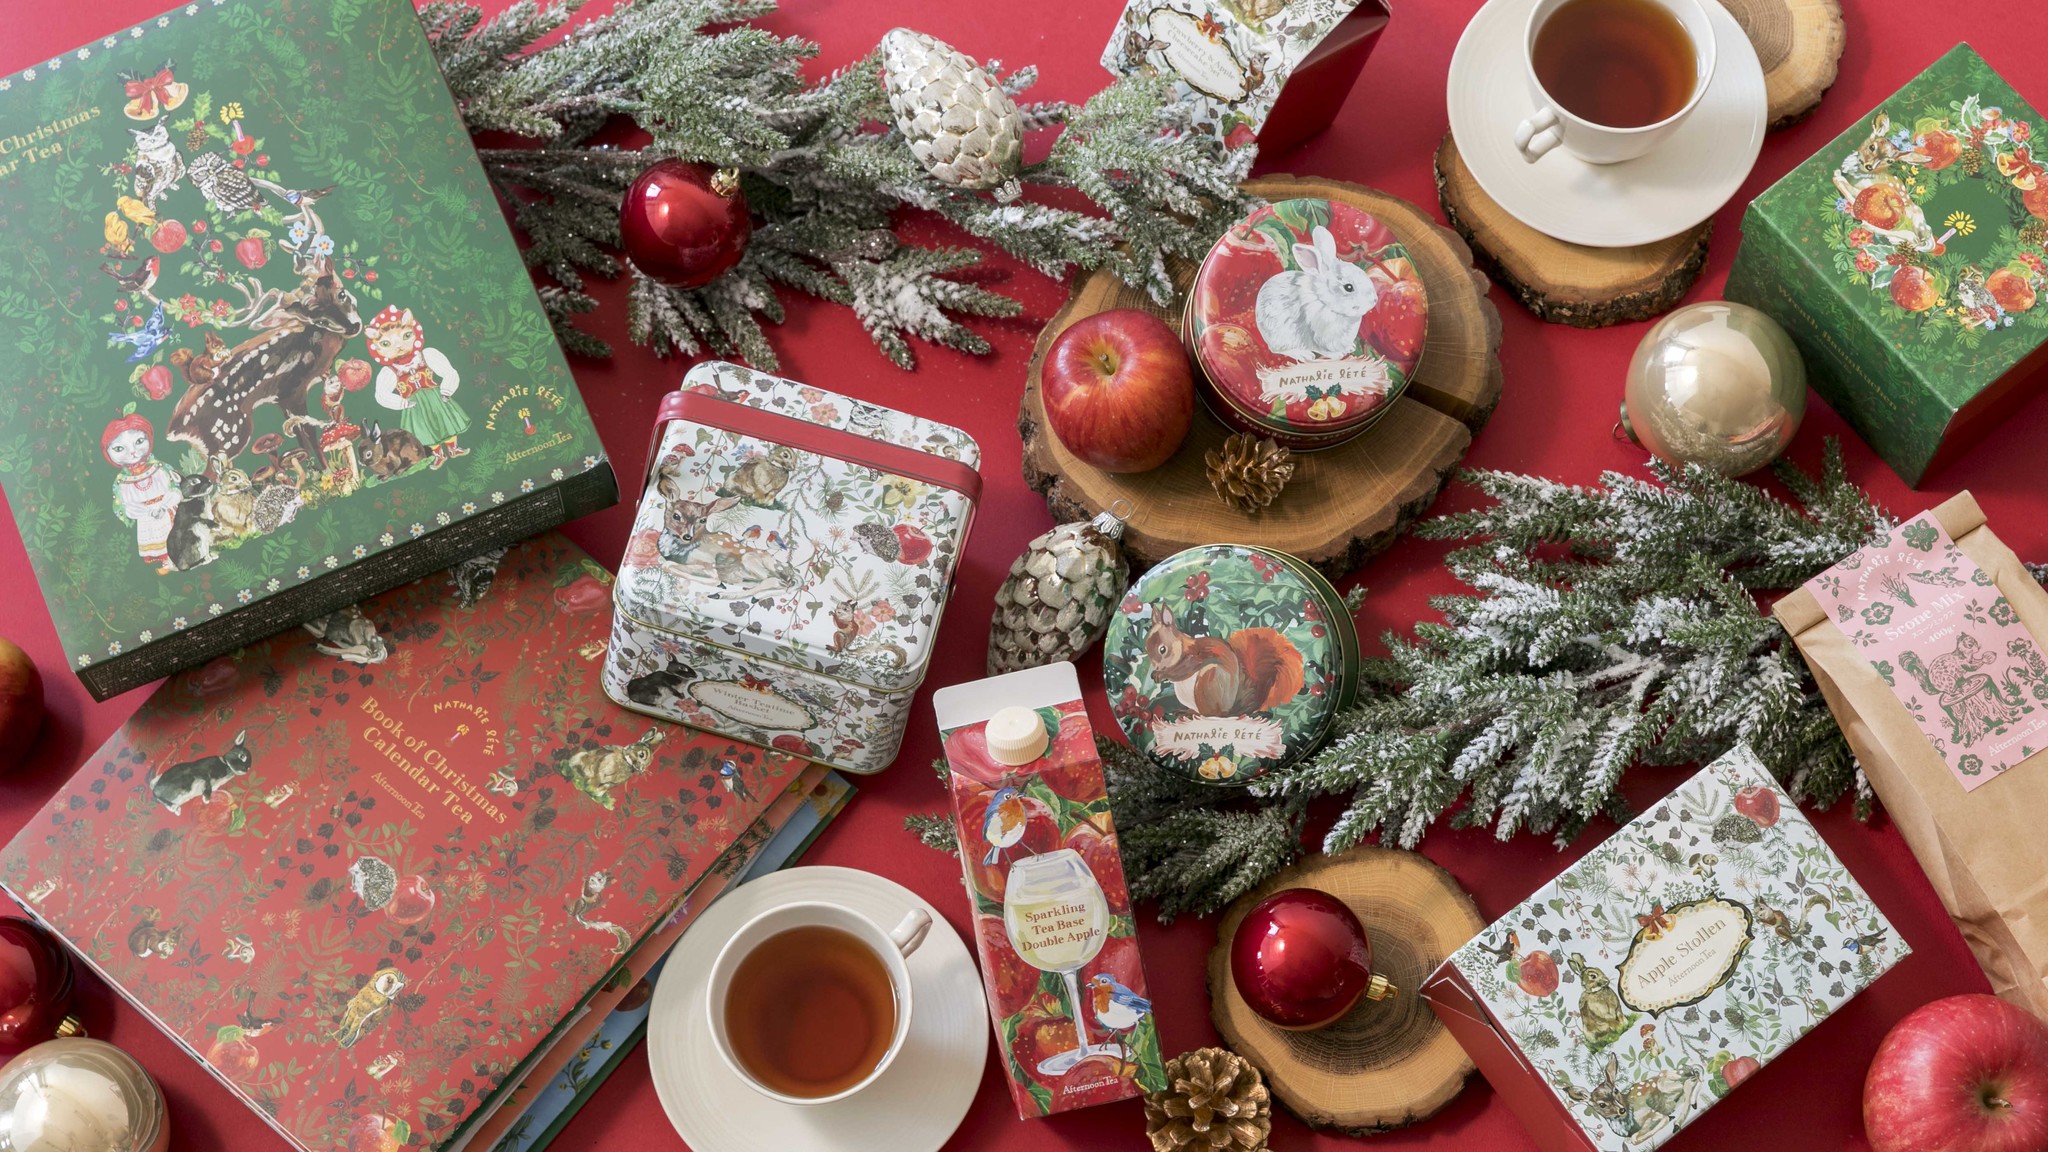 Afternoon Tea クリスマスシーズンをおうちで楽しく過ごすアイテム デコして楽しむリース型バウムクーヘンや人気のスコーンを手作りできるセットも クリスマスギフト 株式会社サザビーリーグ アイビーカンパニーのプレスリリース